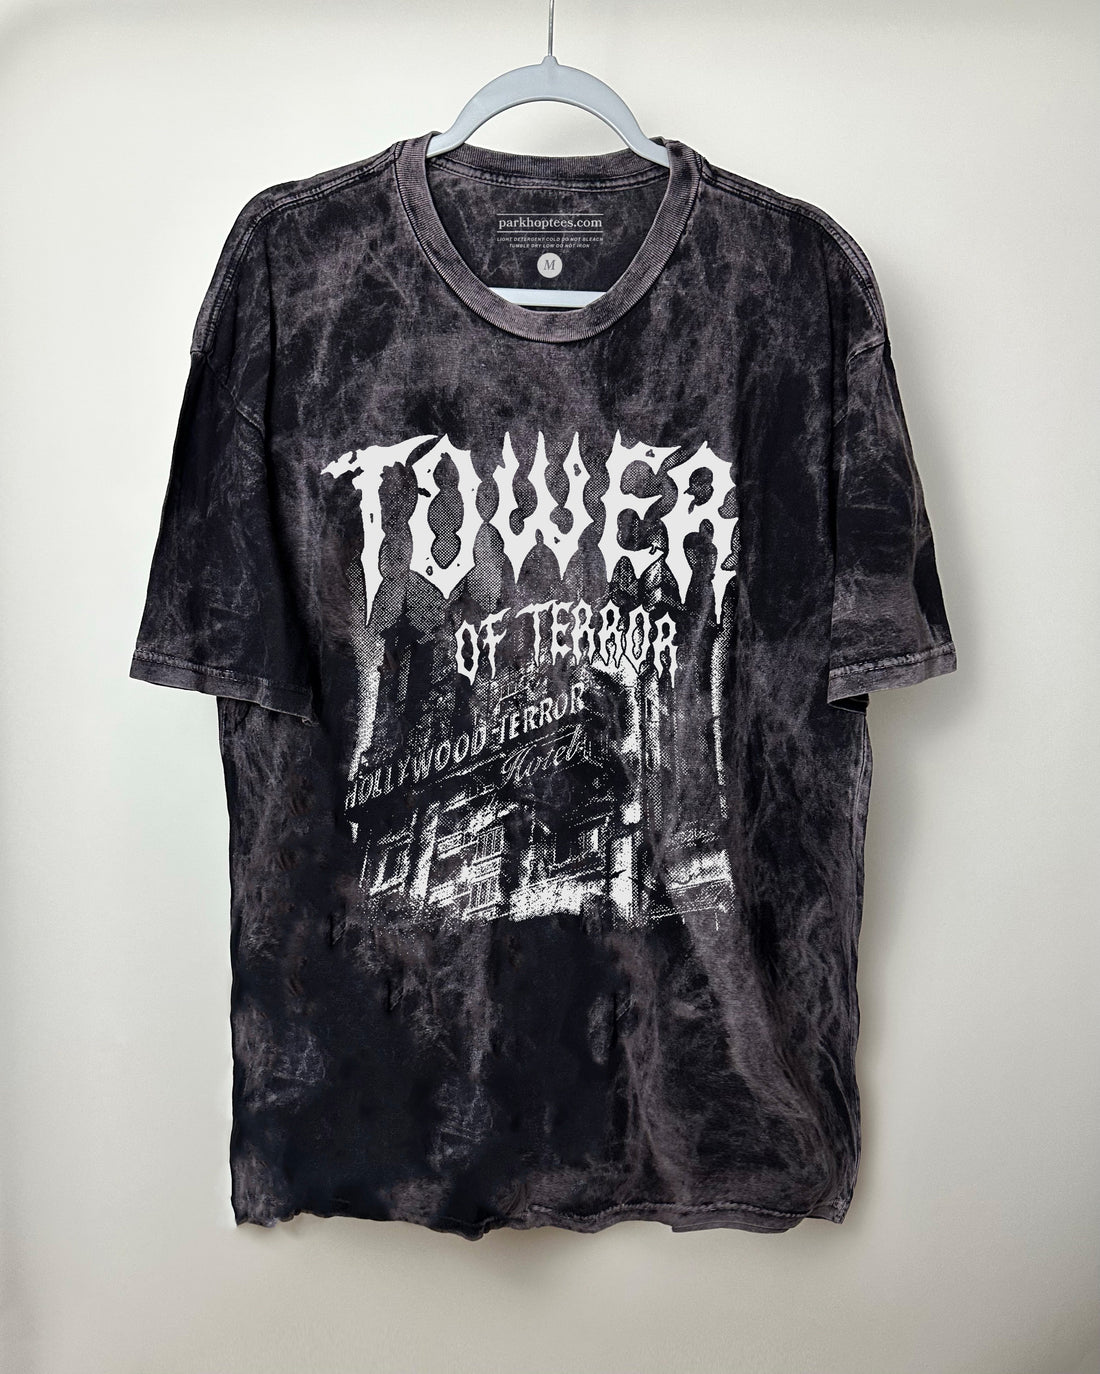 🤘 Tower of Terror Heavy Metal Cloud Wash Shirt - (Premium Unisex Tee)